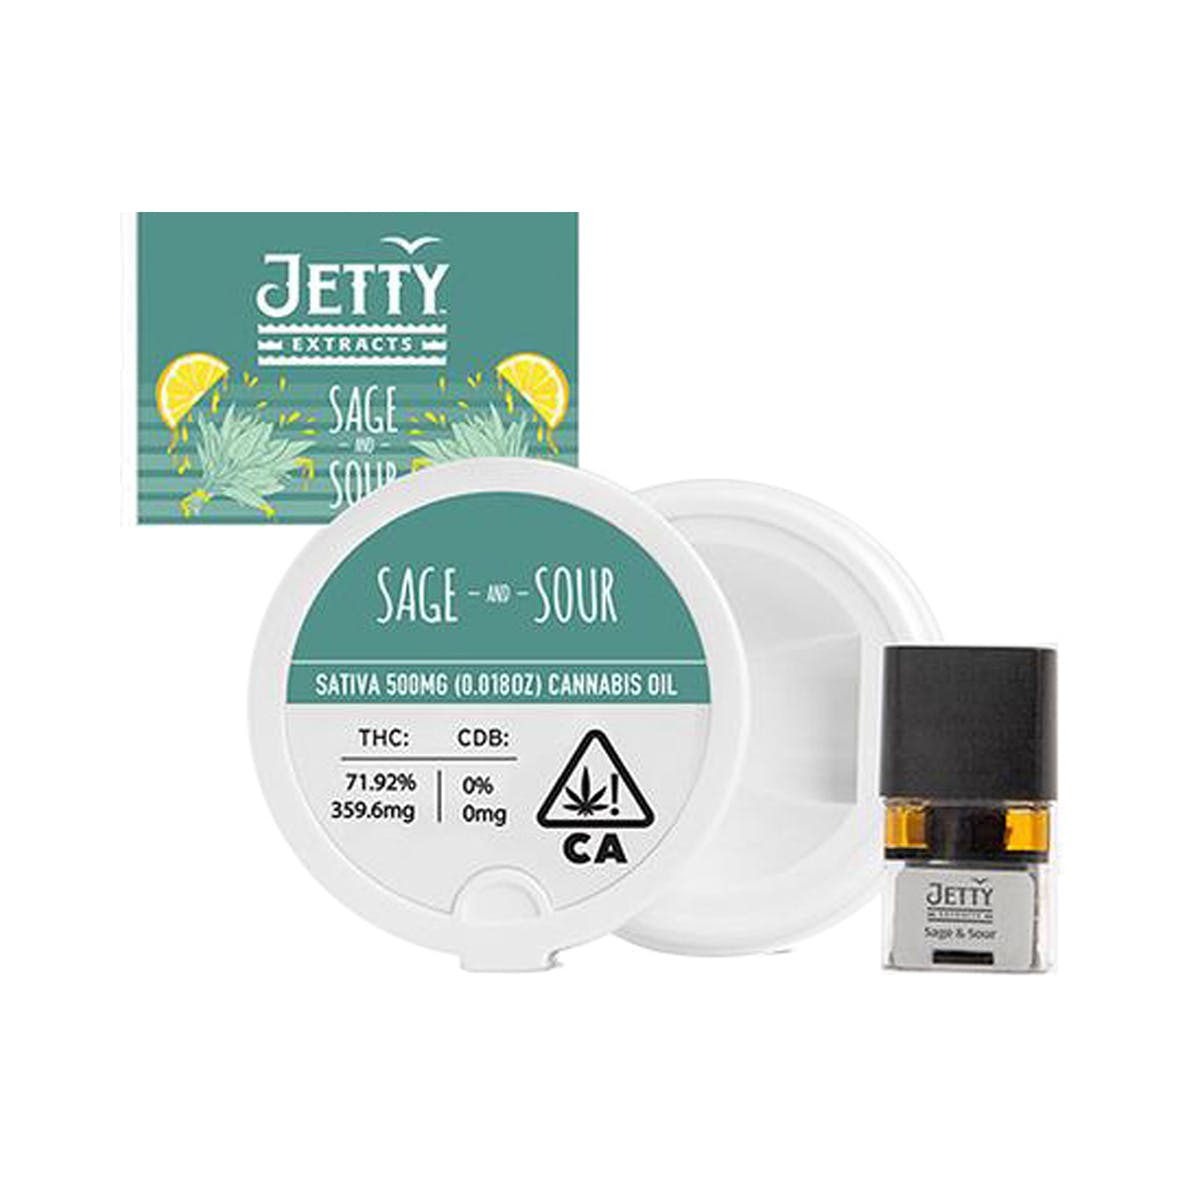 marijuana-dispensaries-elemental-wellness-in-san-jose-pax-era-pod-jetty-extracts-sage-n-sour